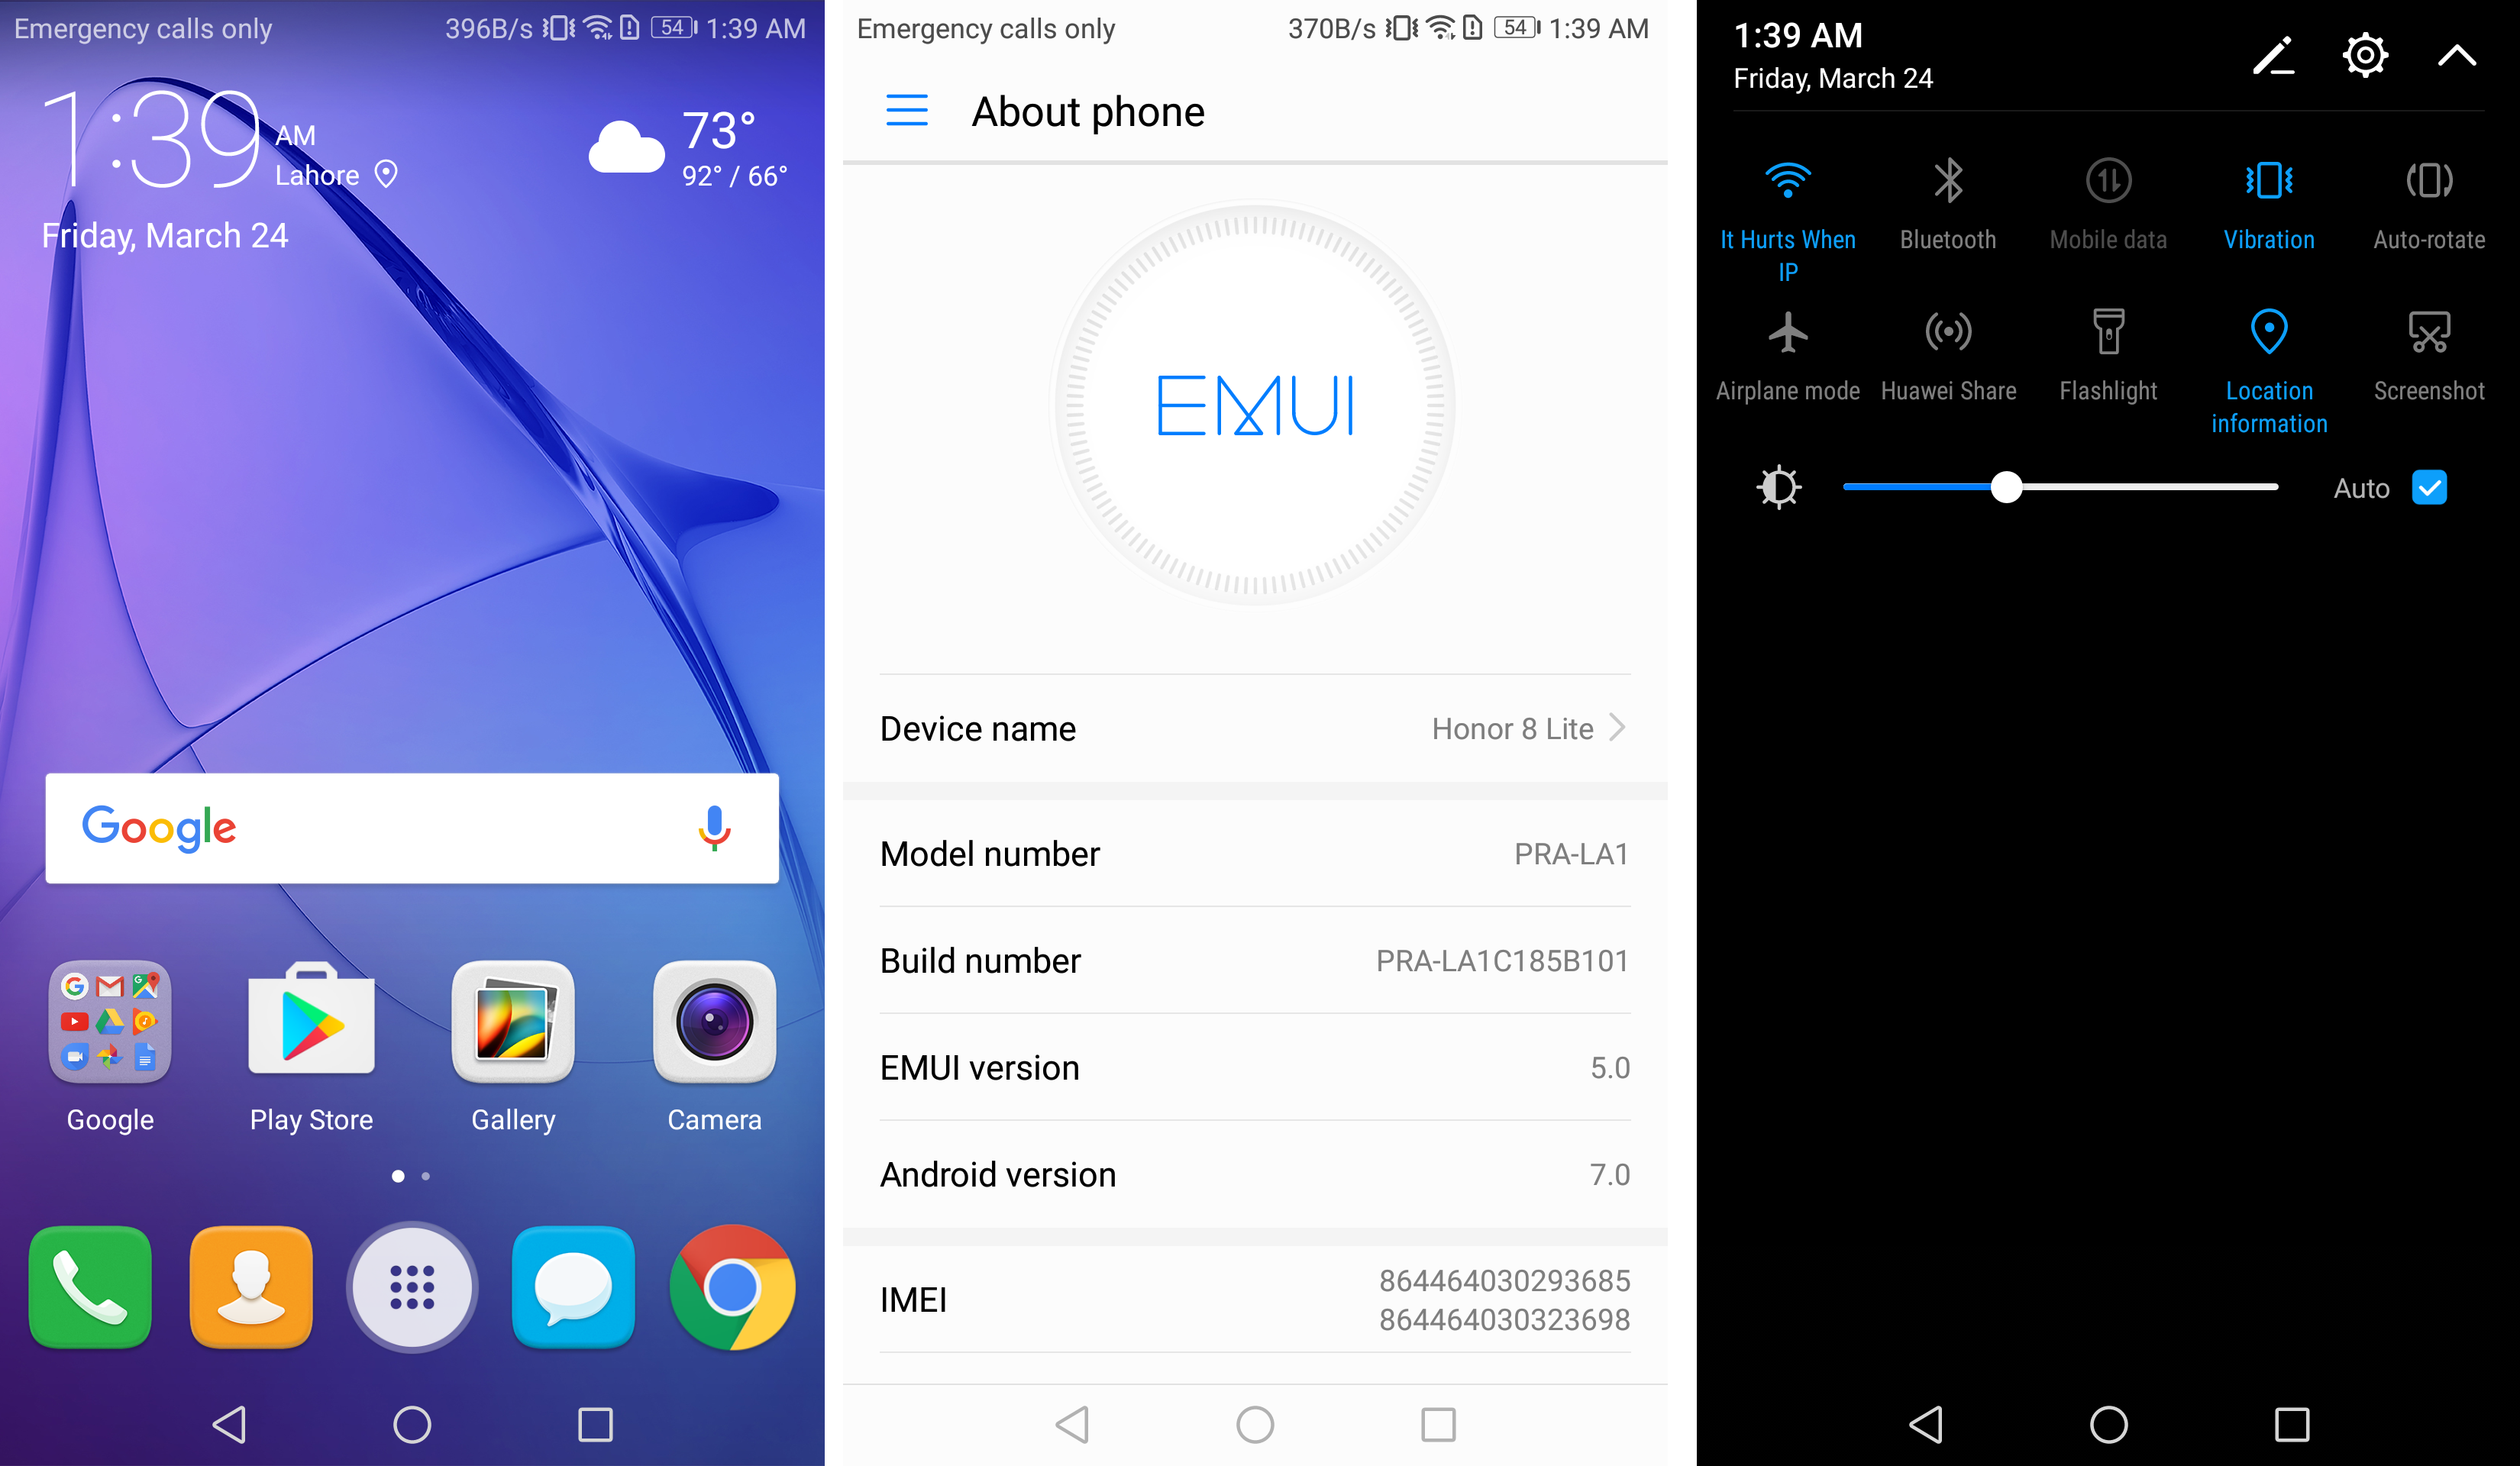 Huawei Honor 8 lite review: EMUI 5.0 interface